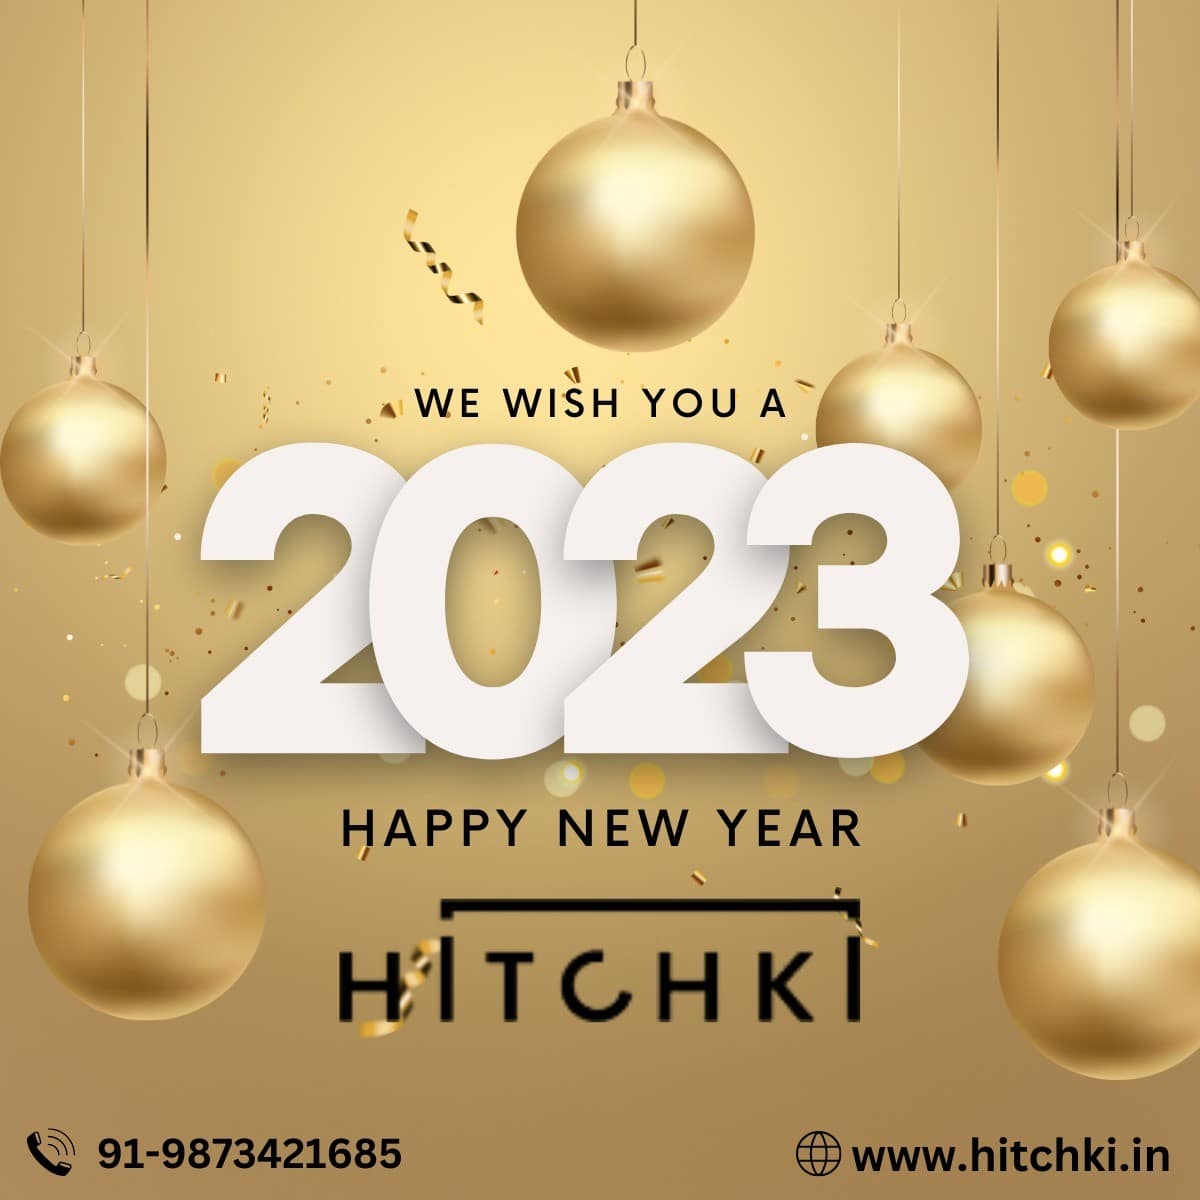 wish you a very happy new year | HITCHKI